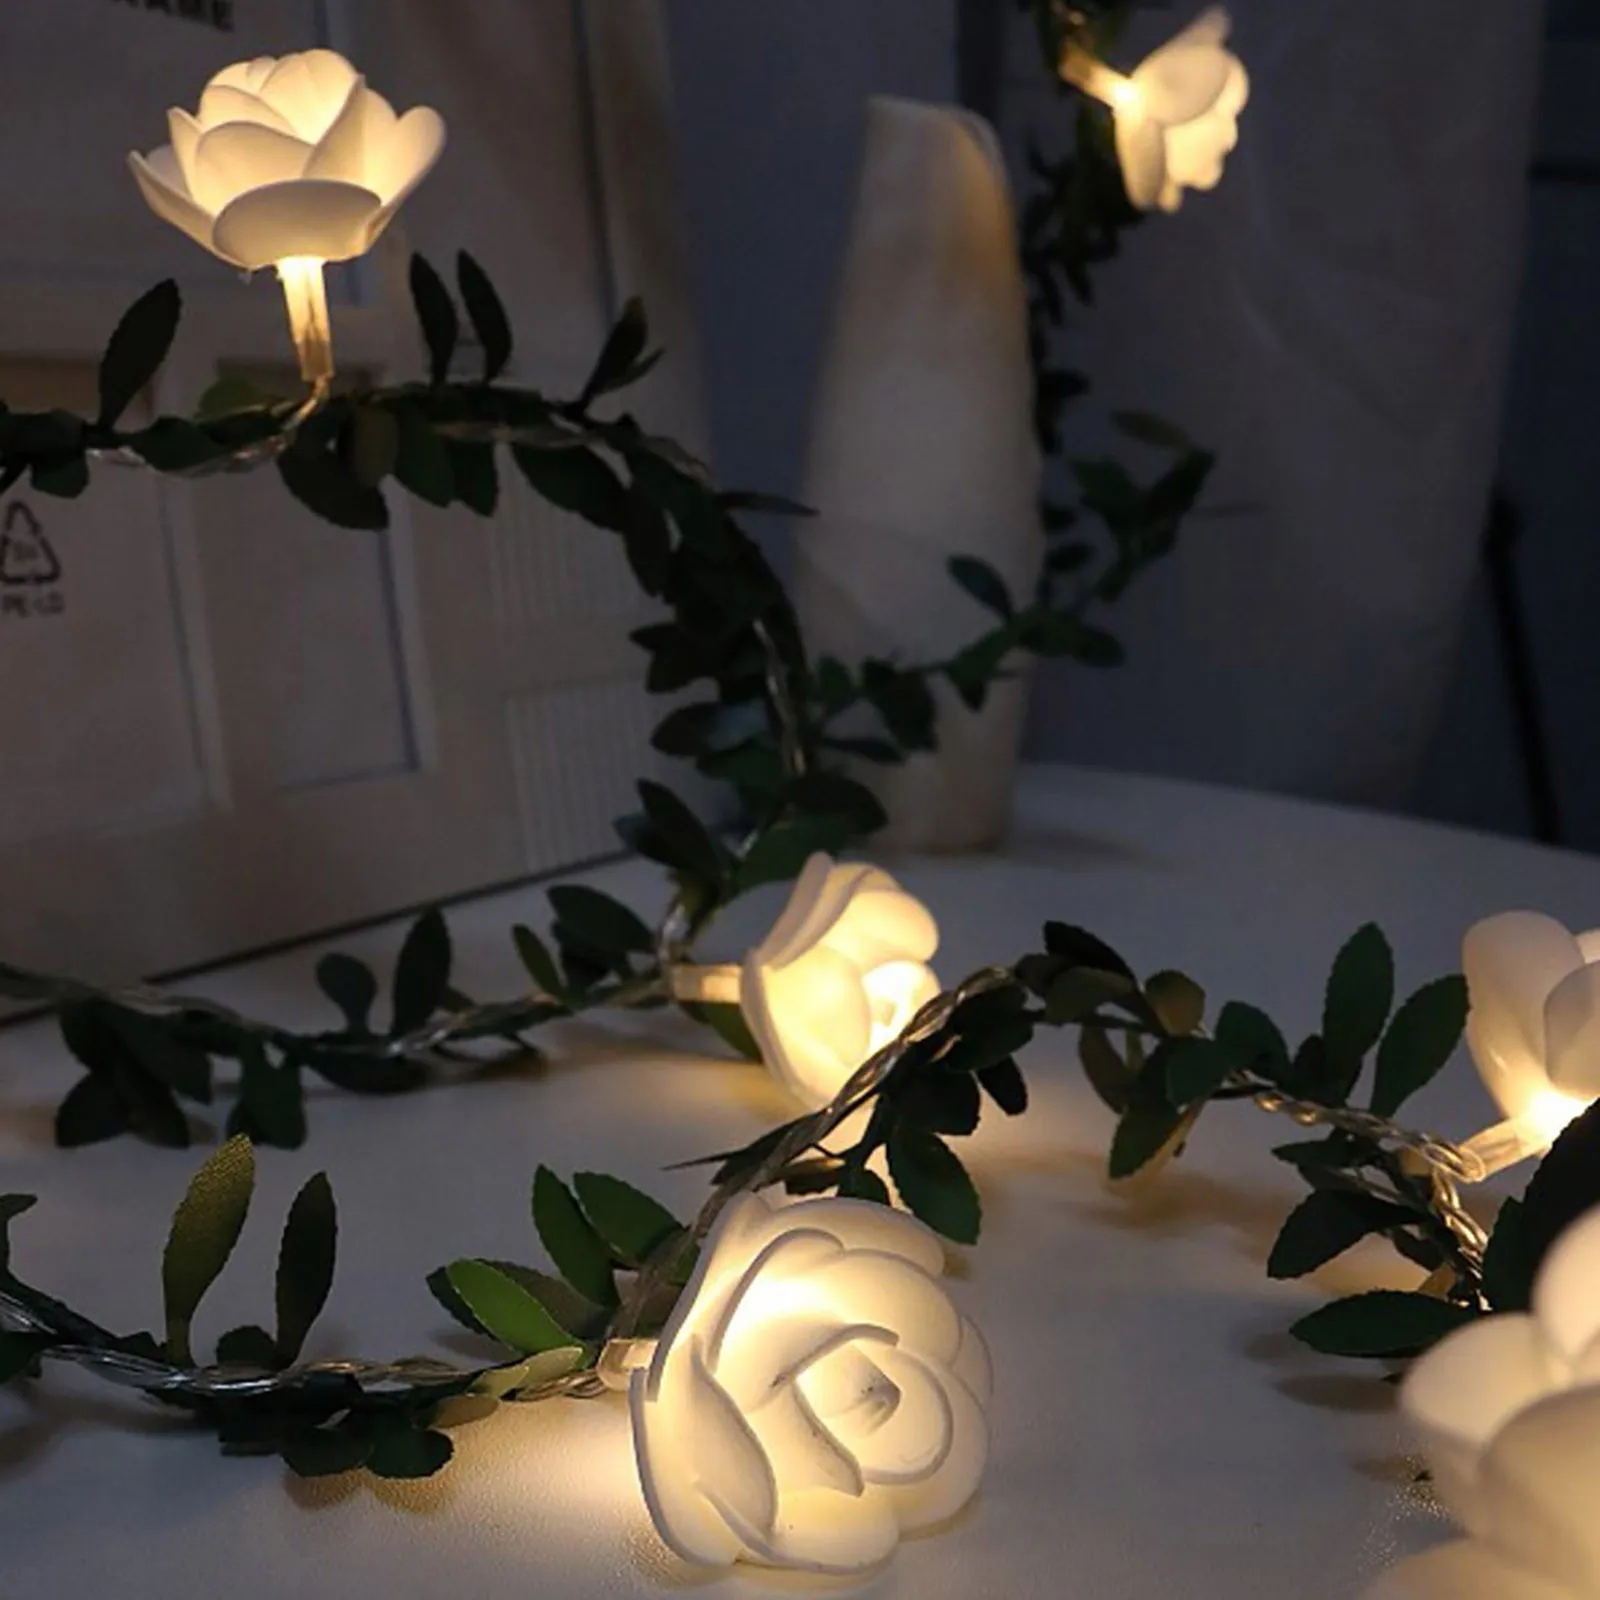 LED Rose Flower Fairy String Battery Lights Outdoor Indoor Garden Party Decor. 